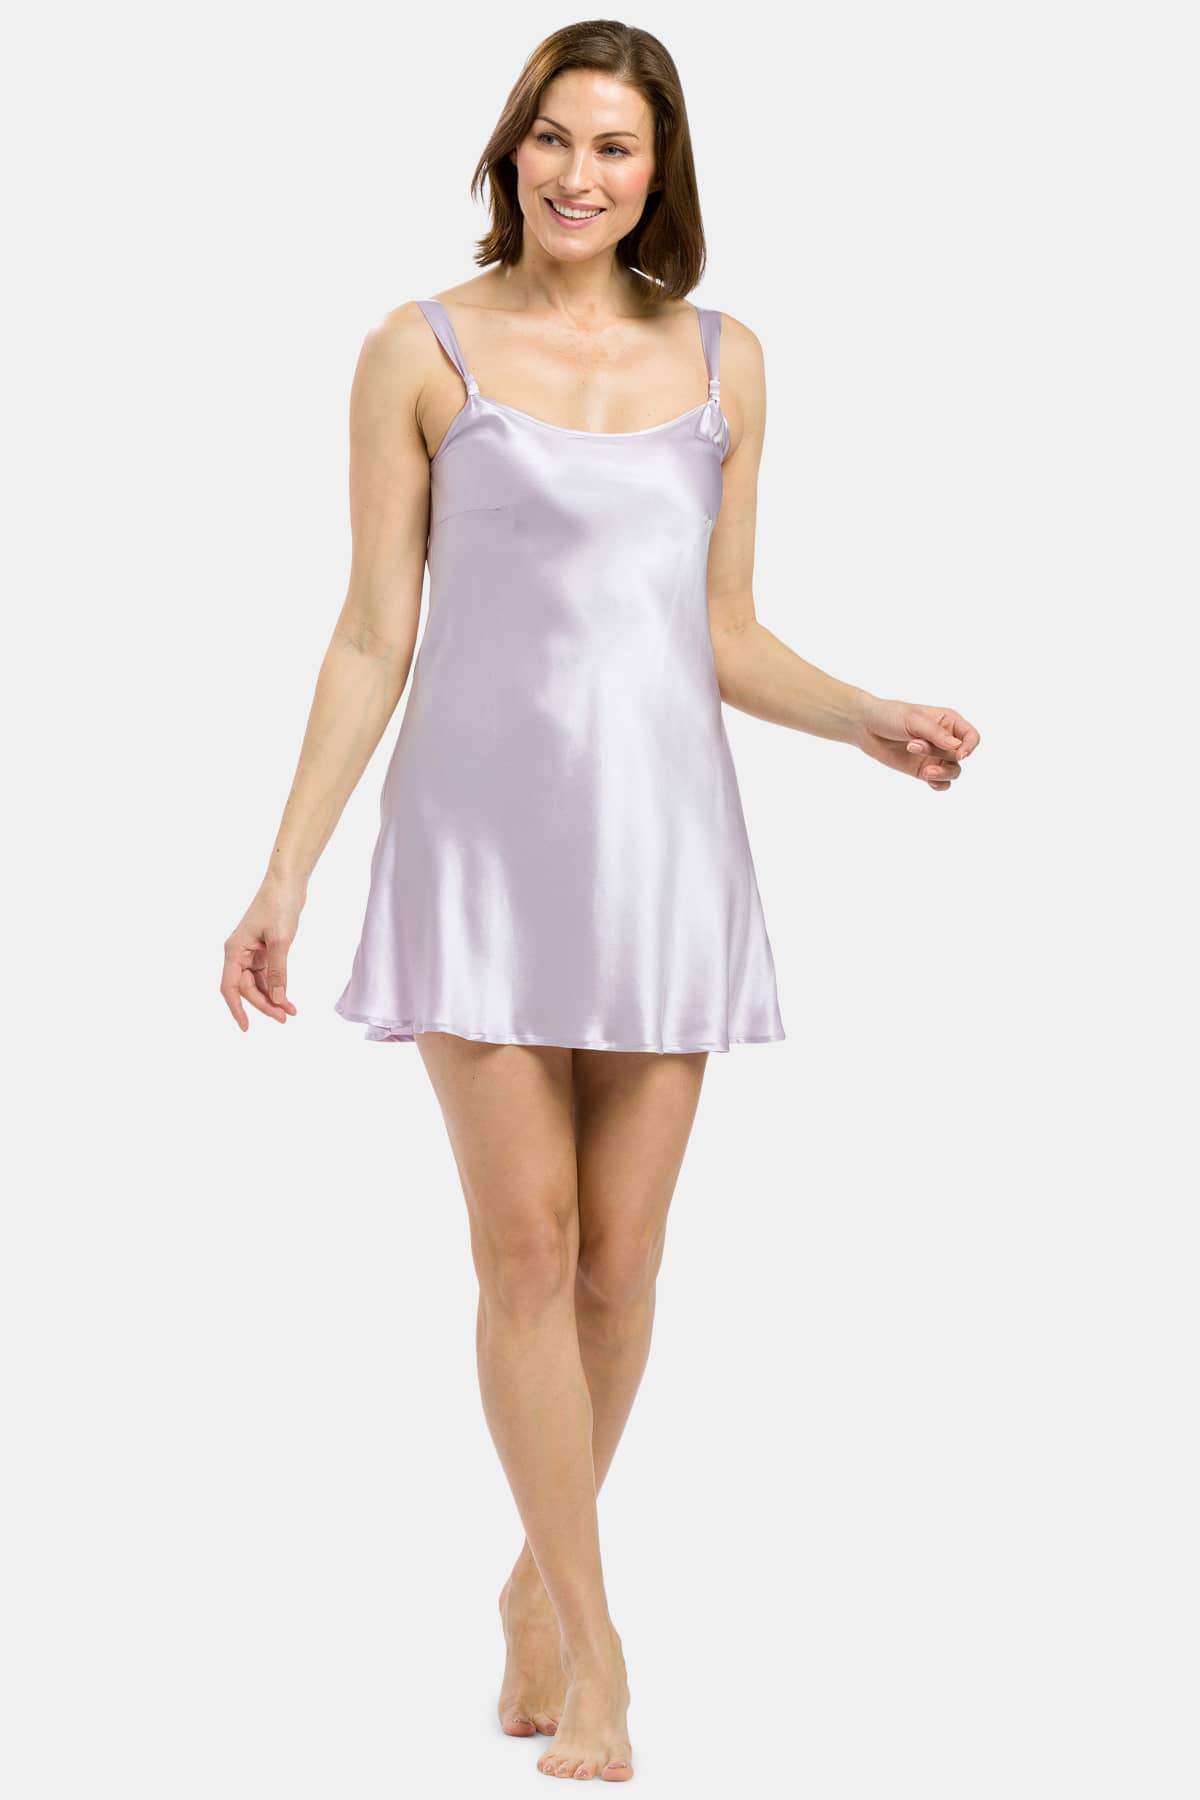 Sleepwear Womens Chemise Nightgown Full Slip Lounge Dress with